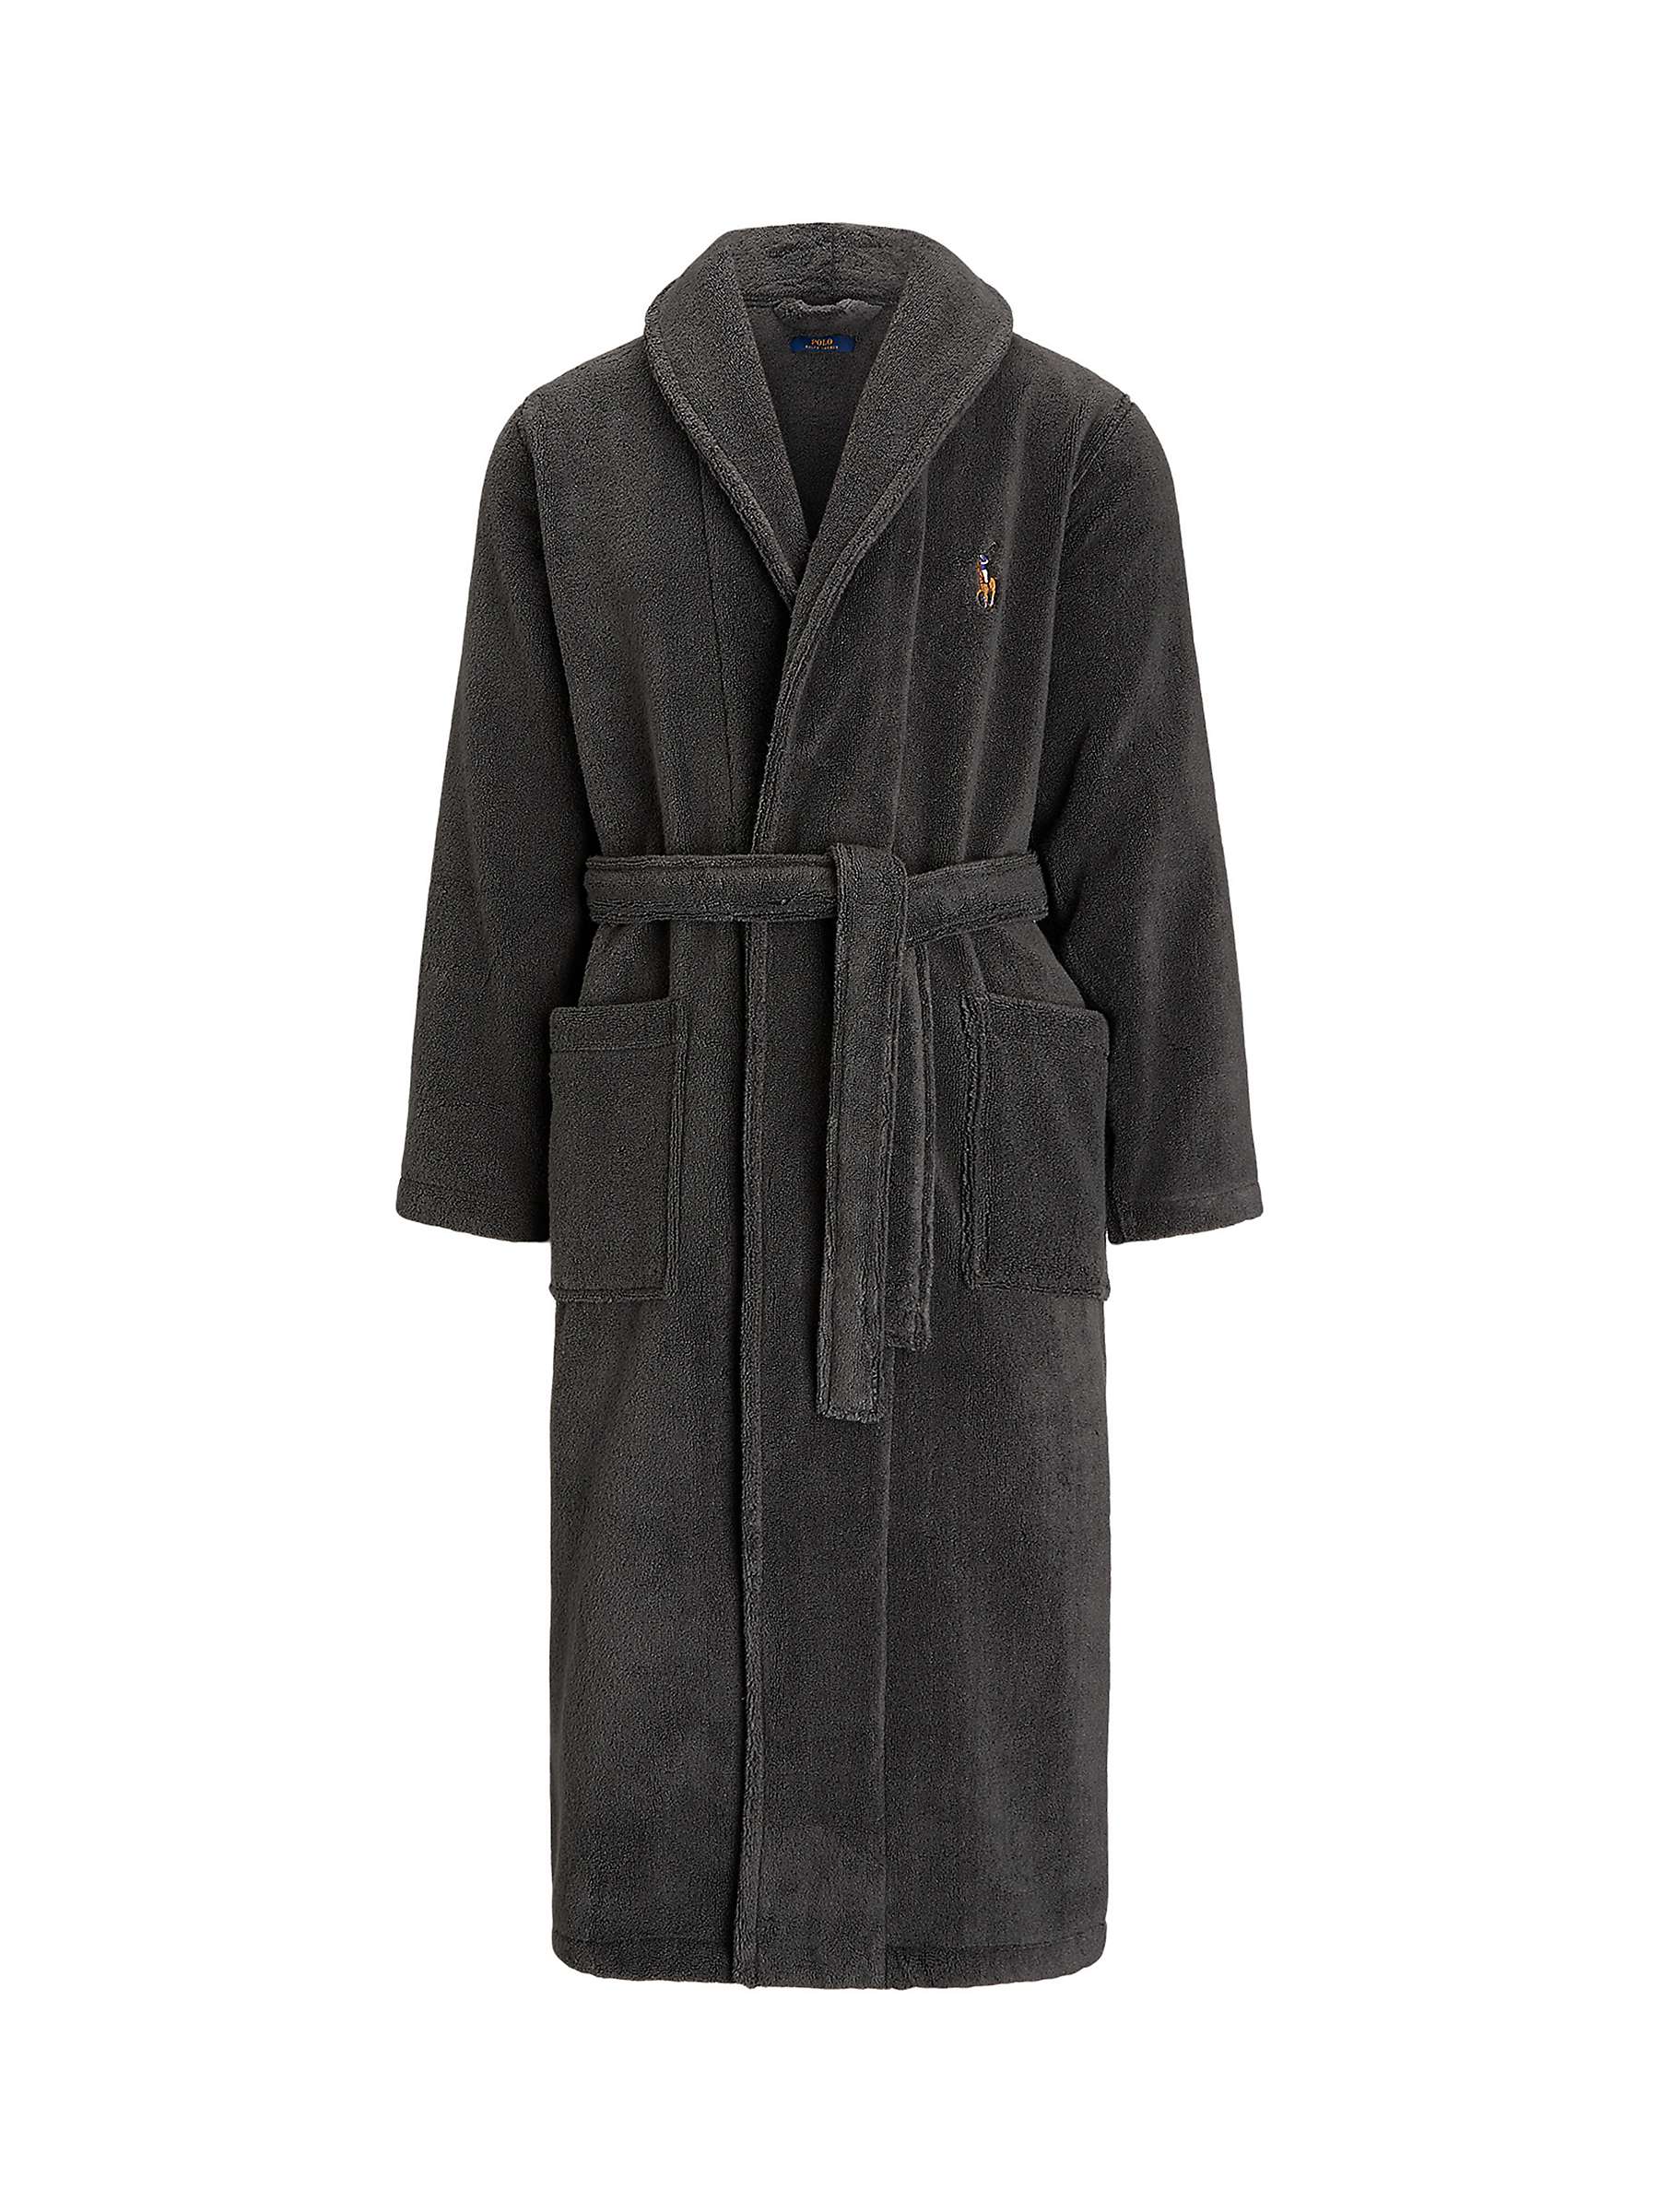 Buy Polo Ralph Lauren Shawl Collar Terry Bath Robe, Dark Slate Online at johnlewis.com